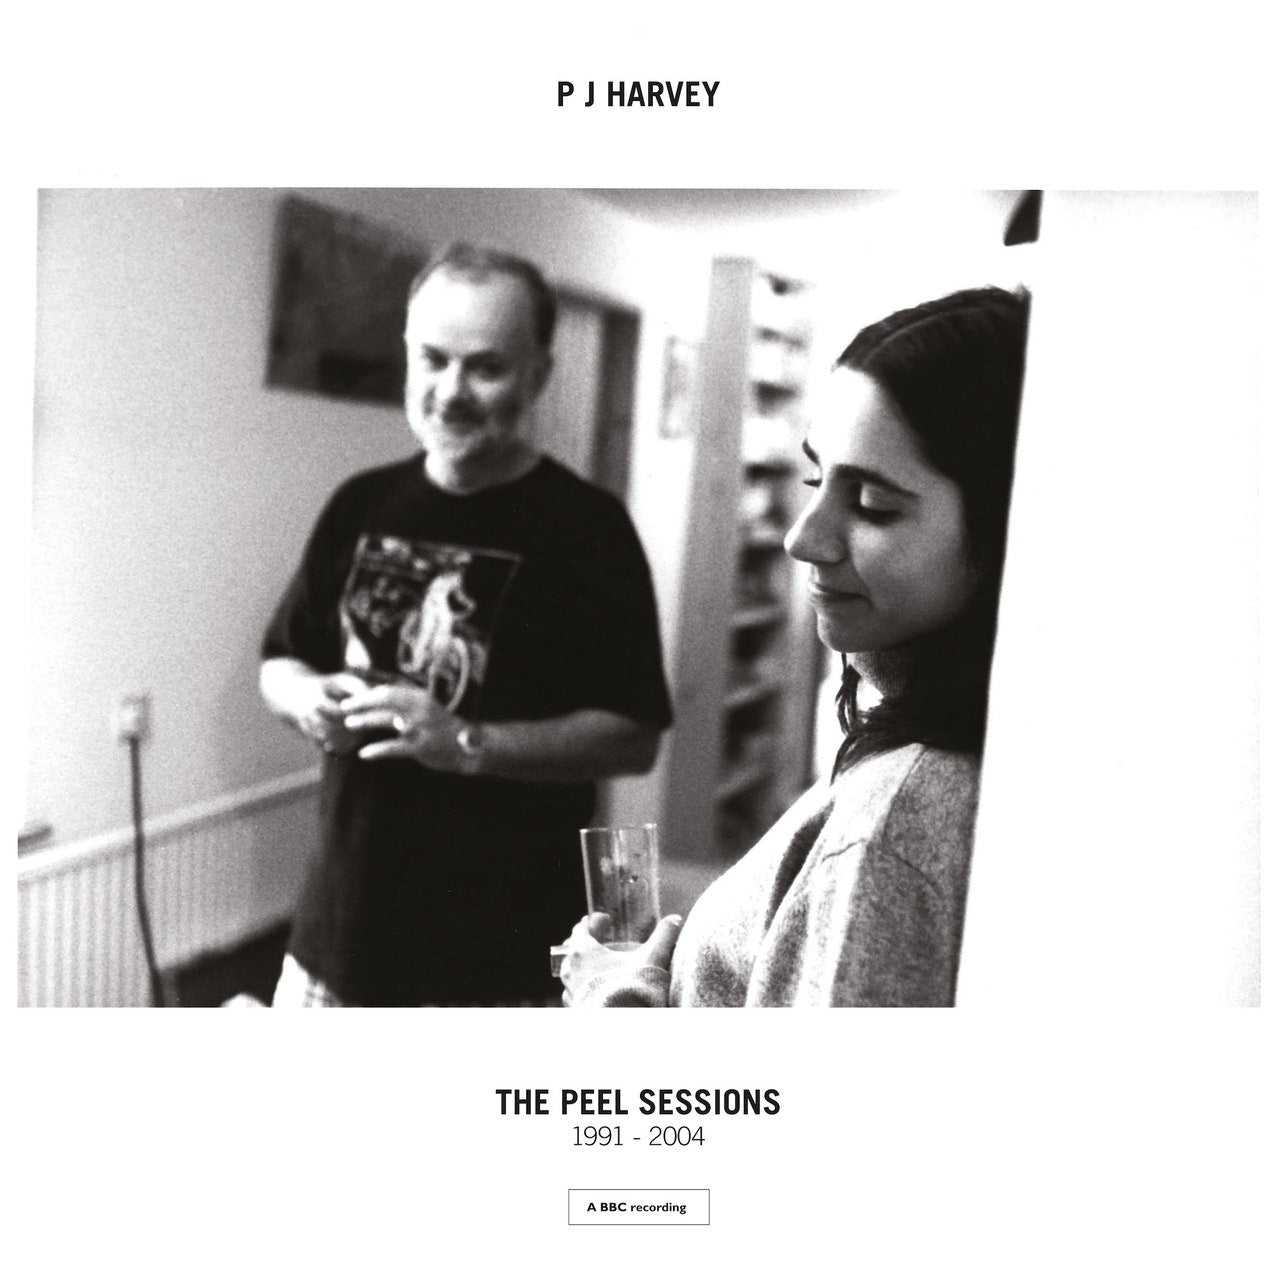 PJ HARVEY - The Peel Sessions 1991-2004 - LP - 180g Vinyl